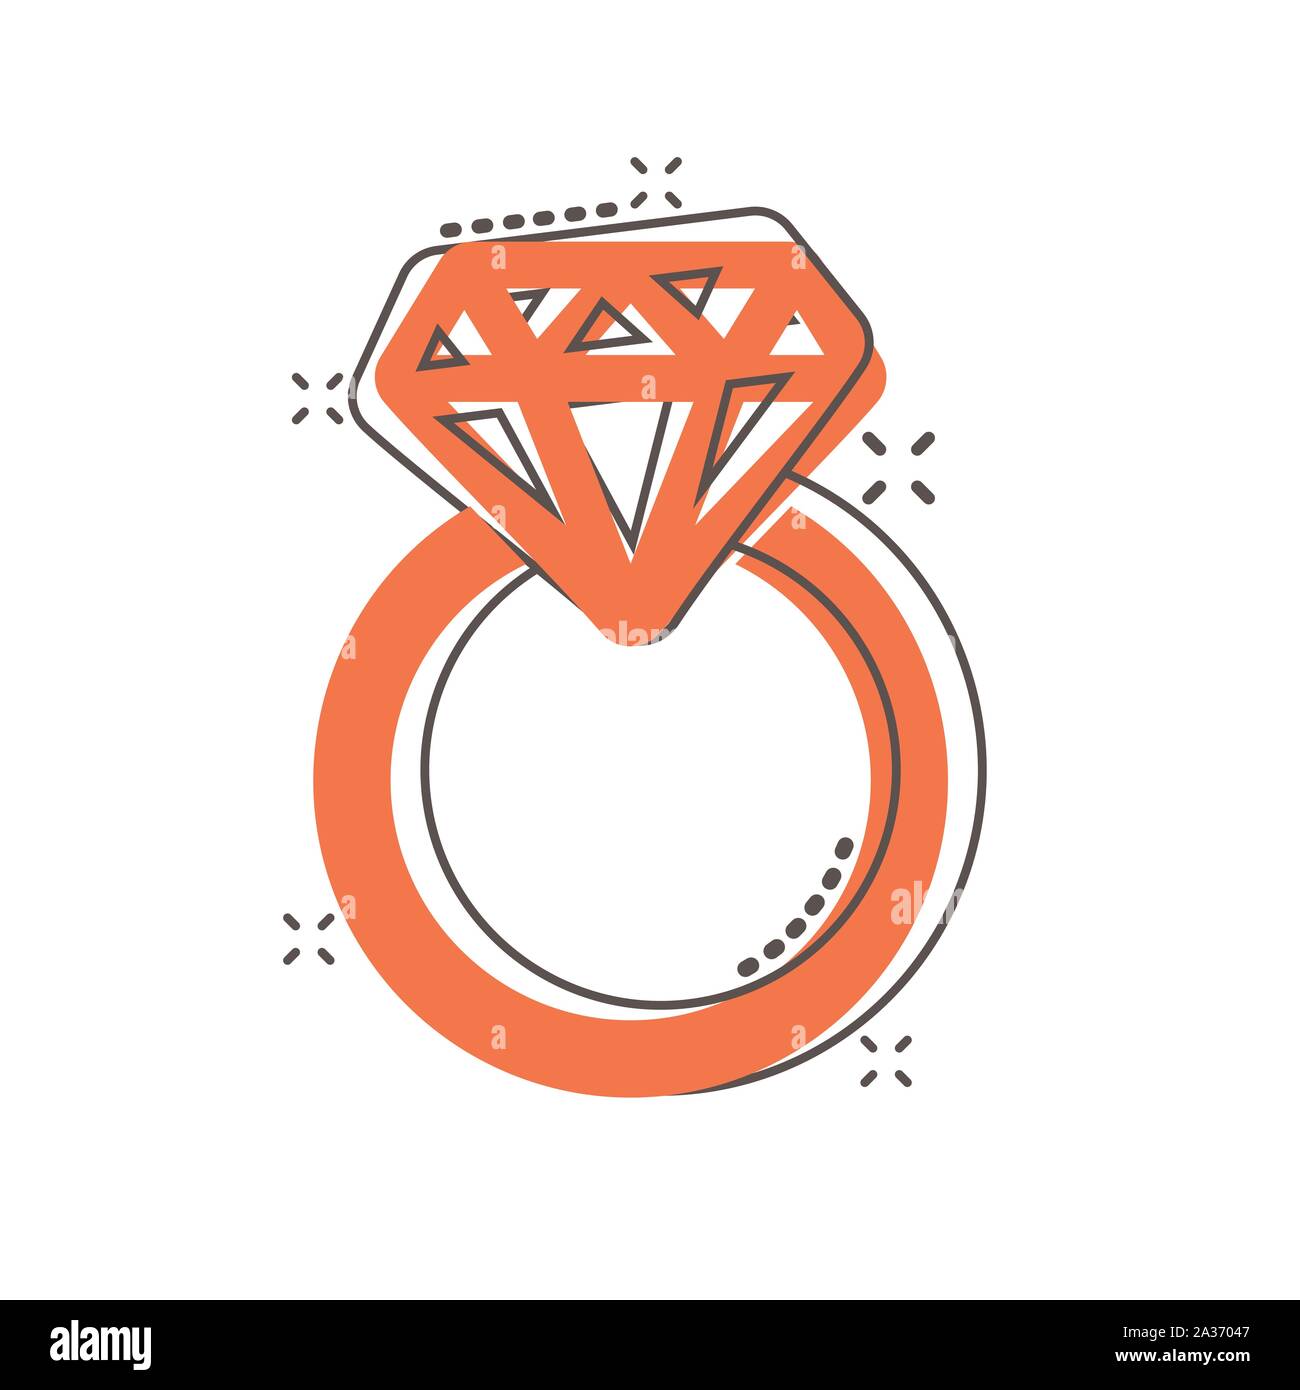 Free Vector | Hand drawn diamond ring cartoon illustration